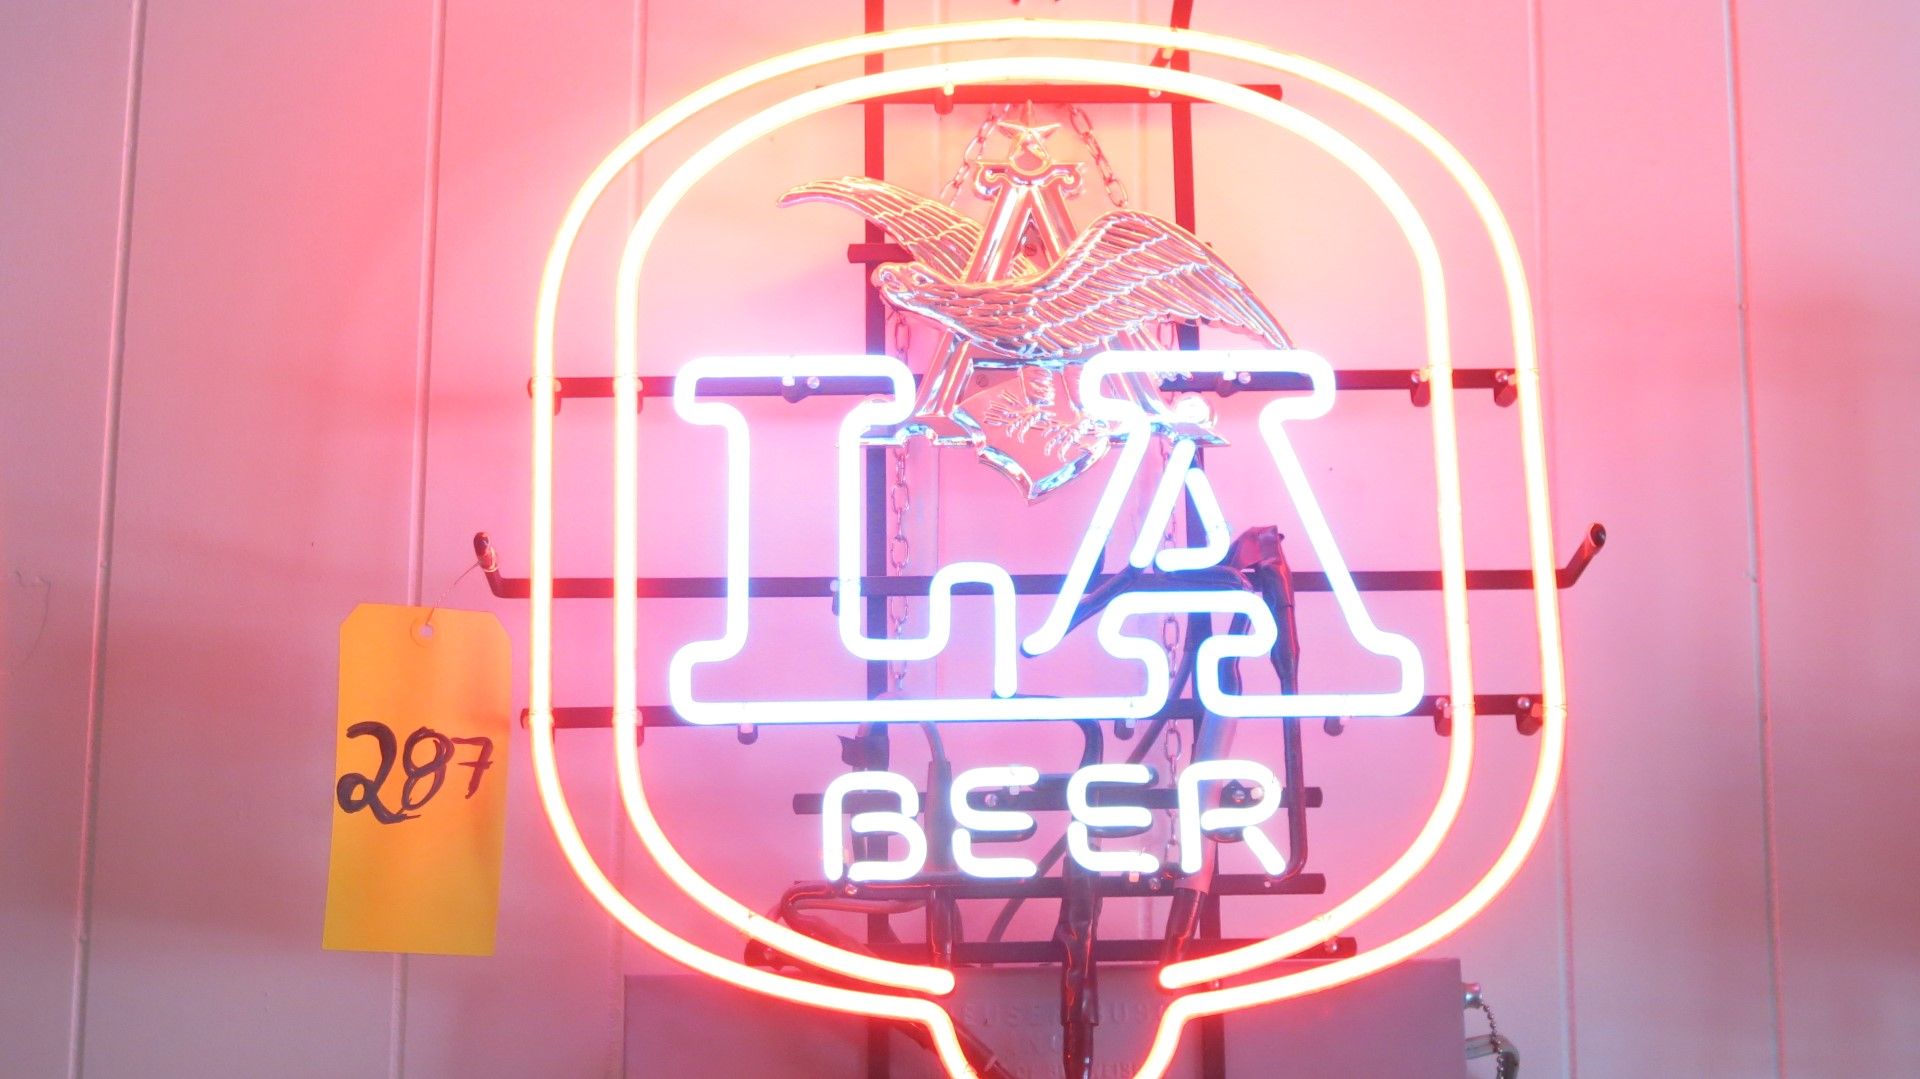 LA Beer Sign